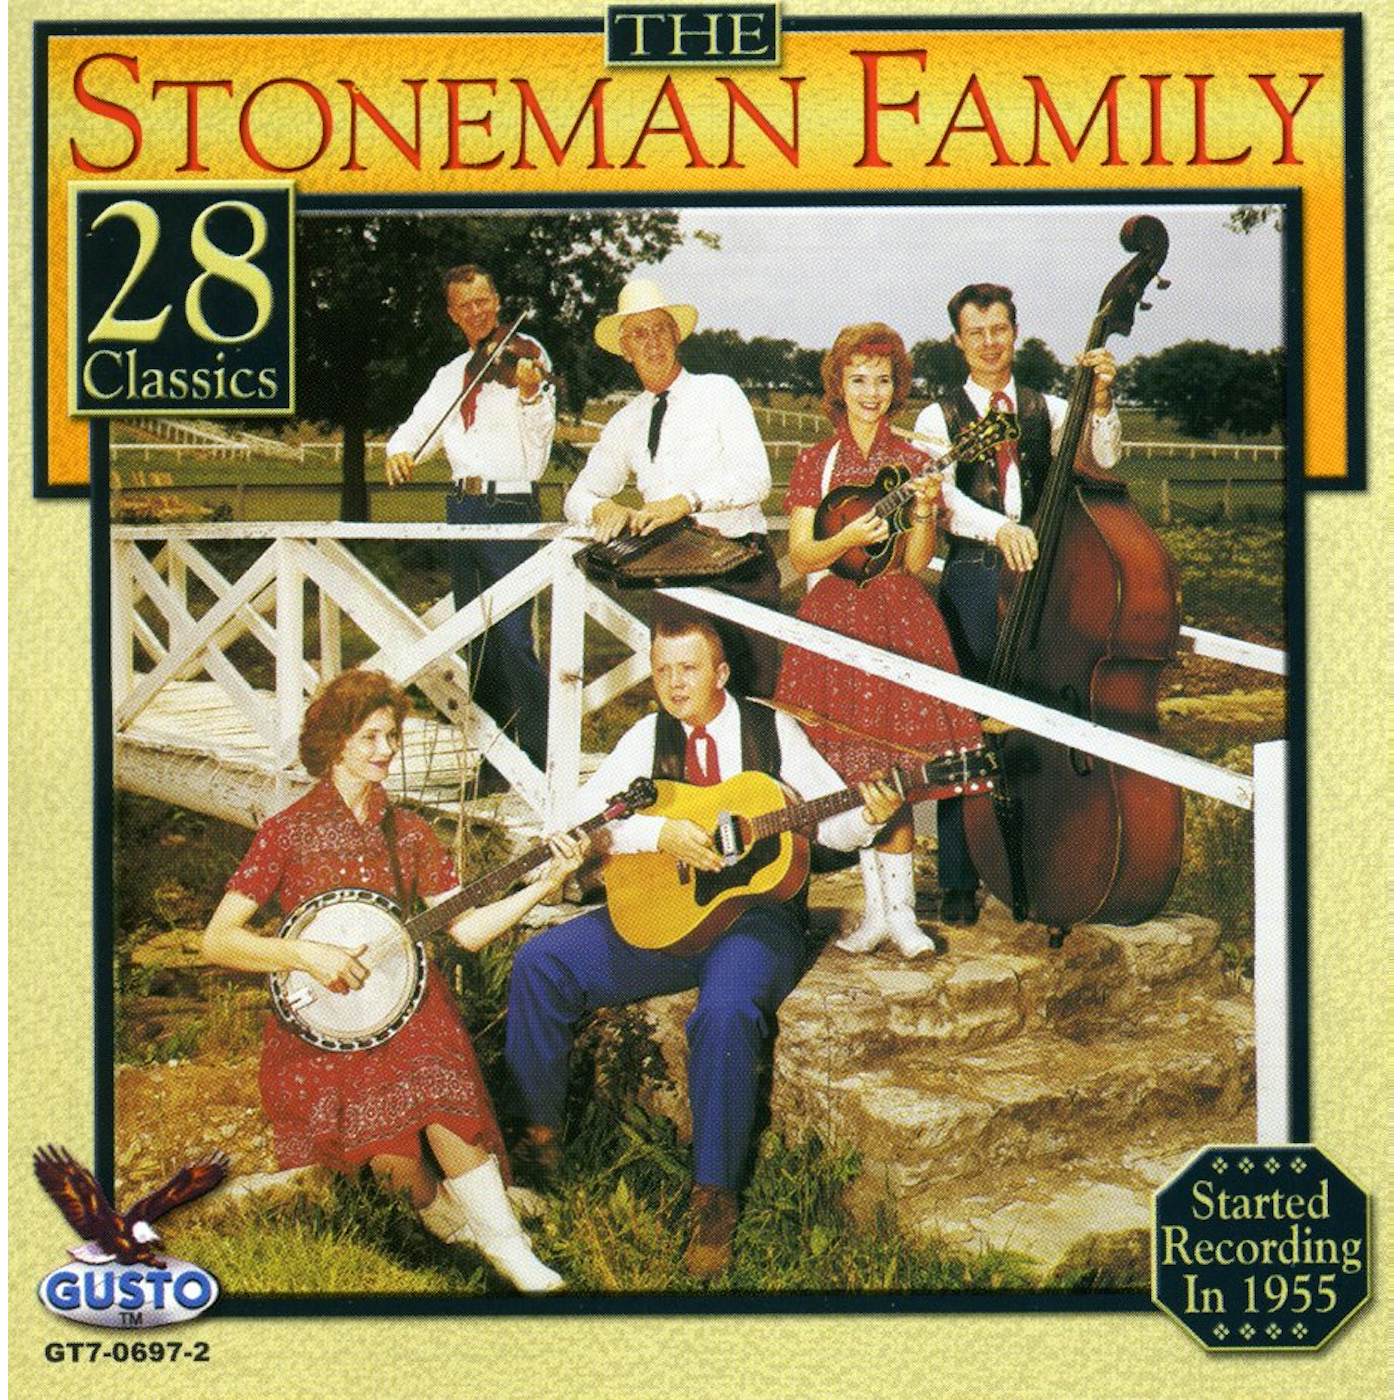 The Stoneman Family 28 CLASSICS CD